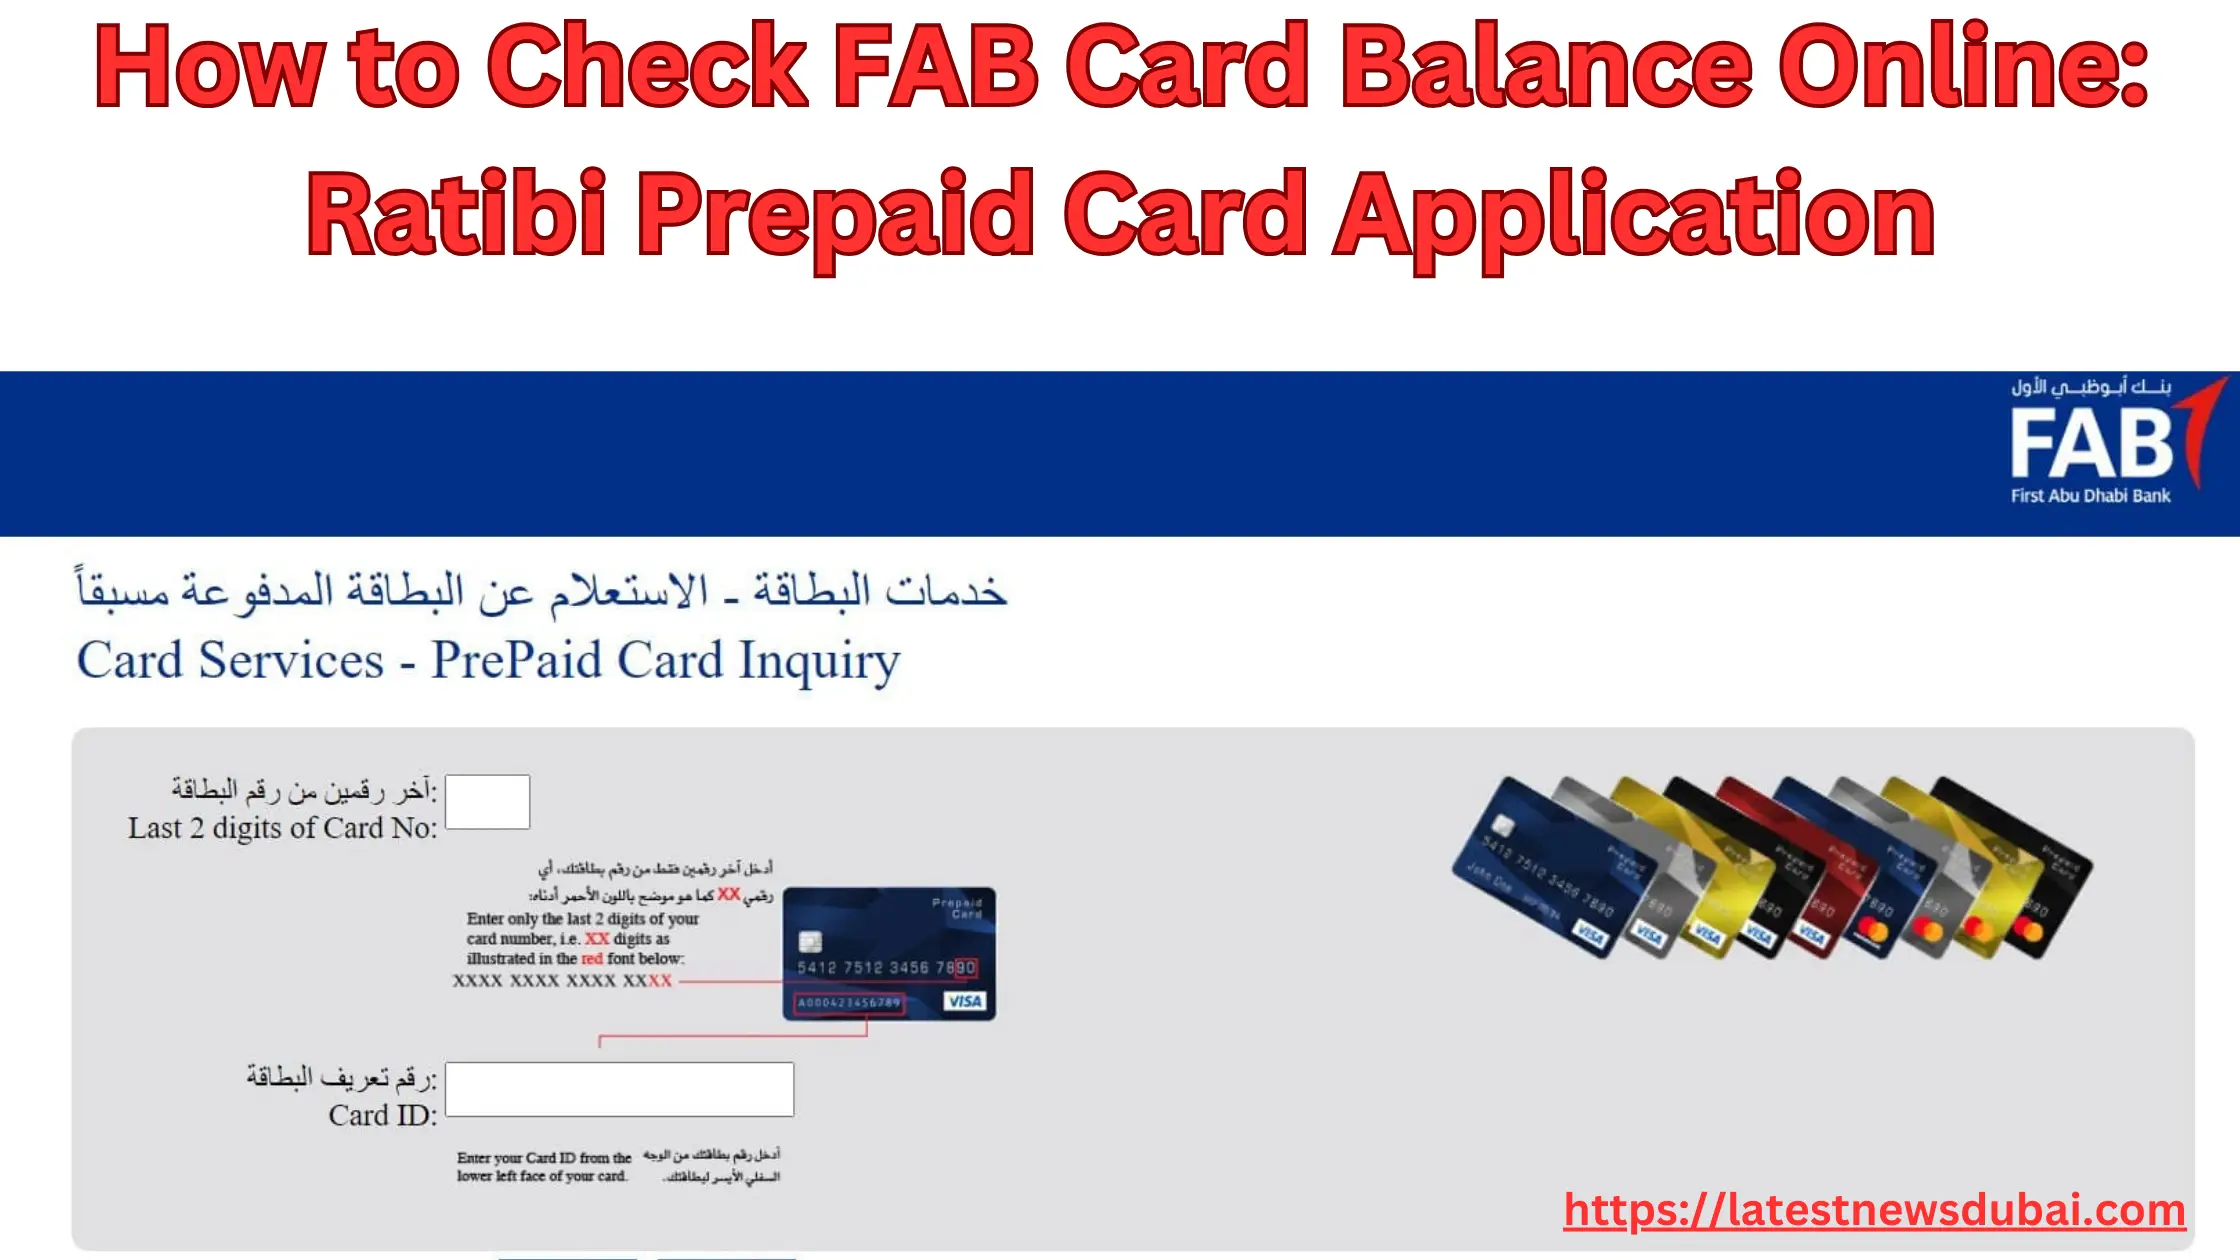 FAB Card Balance Online